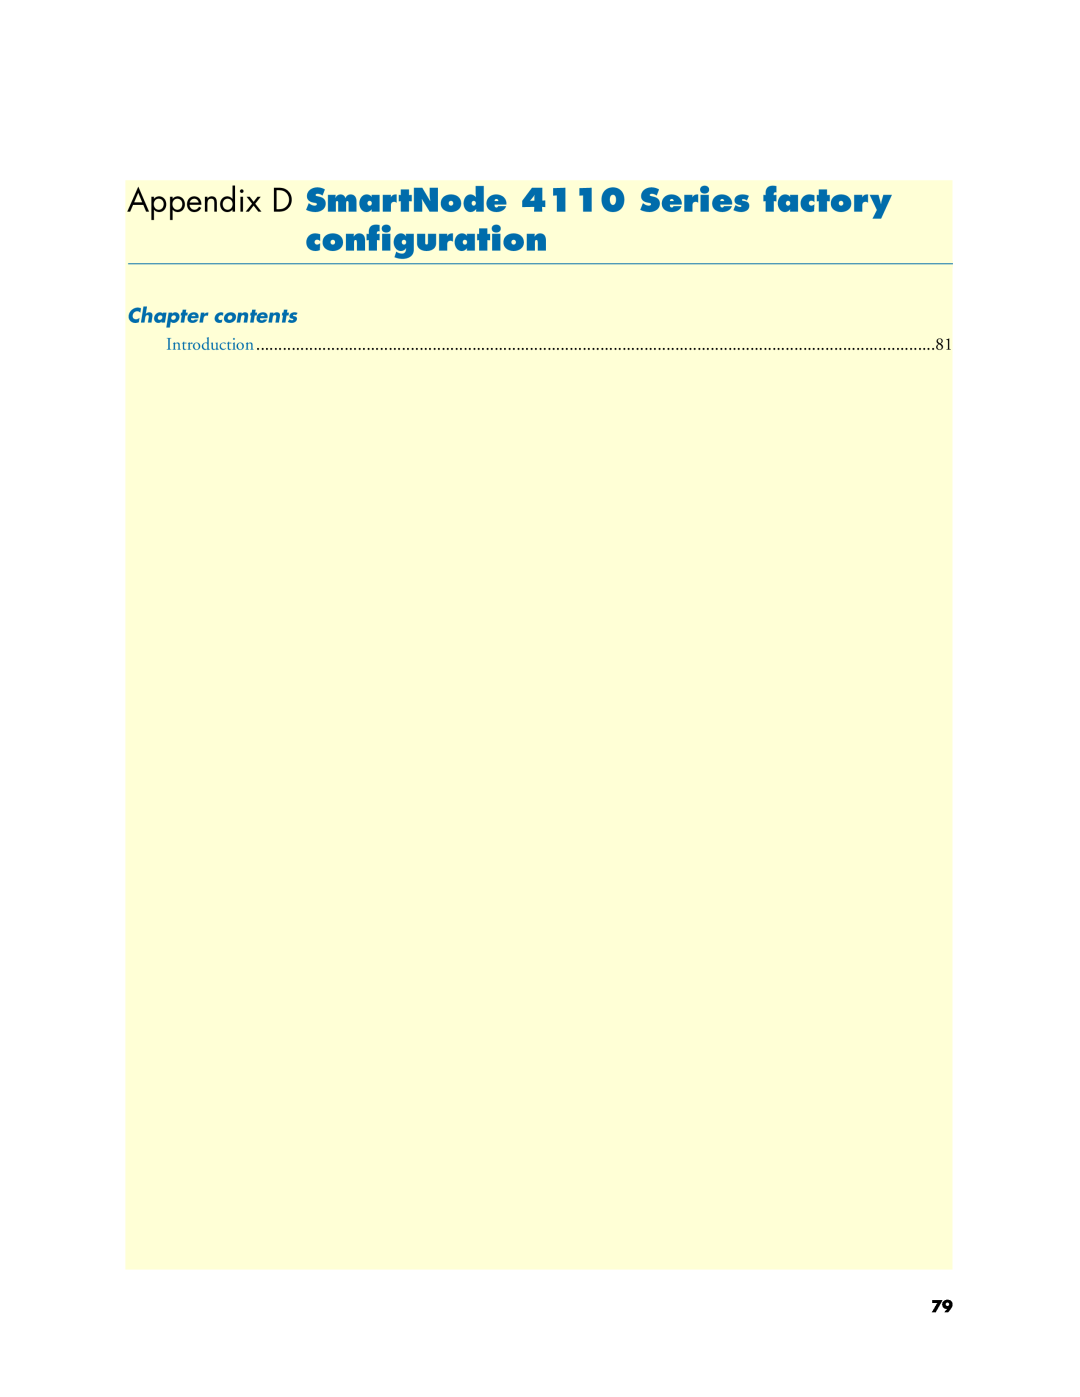 Patton electronic 4520 manual Appendix D SmartNode 4110 Series factory conﬁguration, Chapter contents 